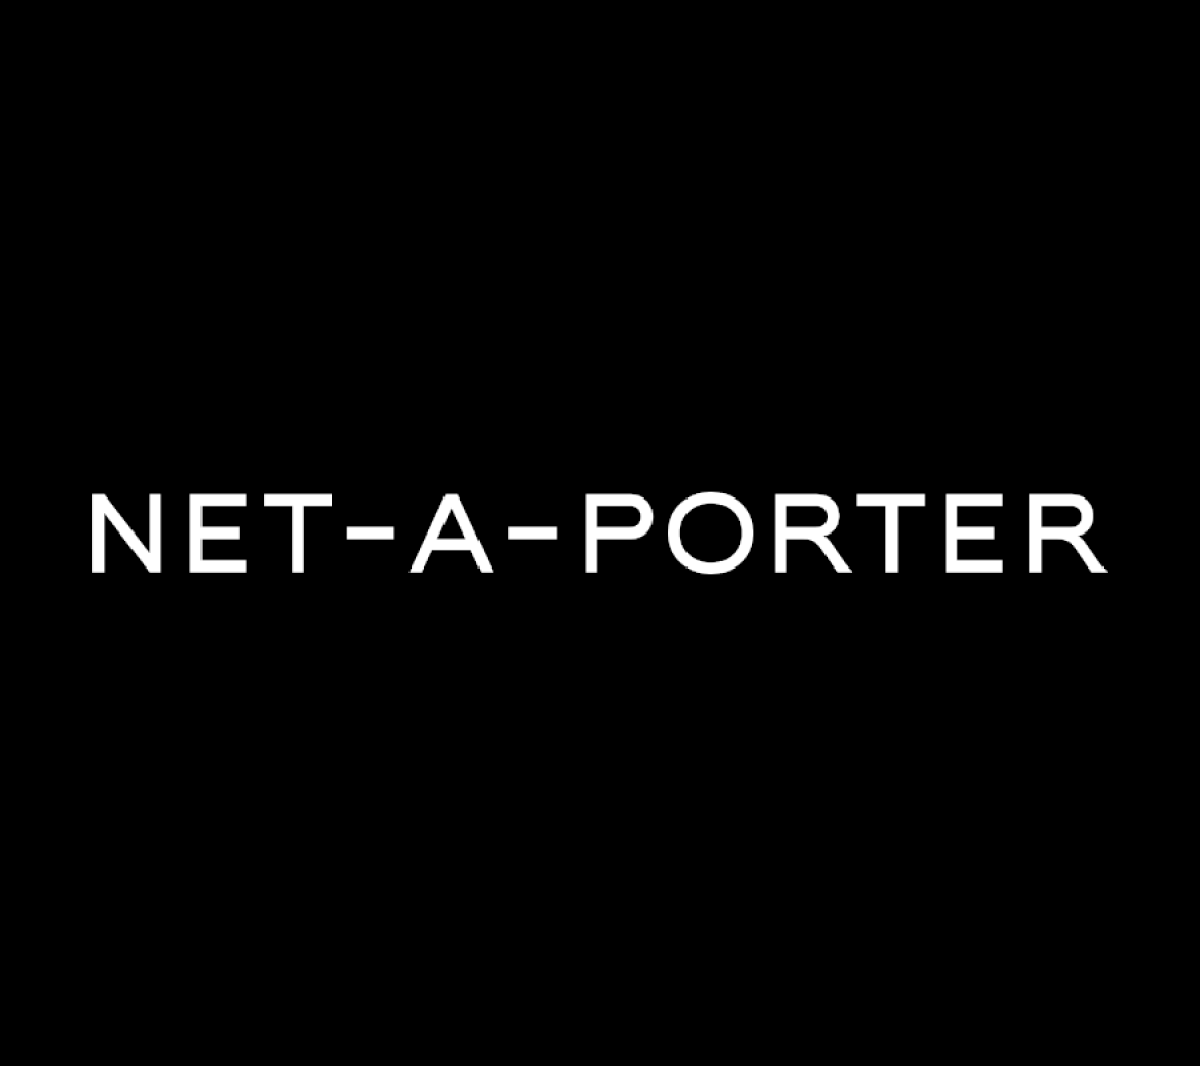 net-a-porter-logo-case-study